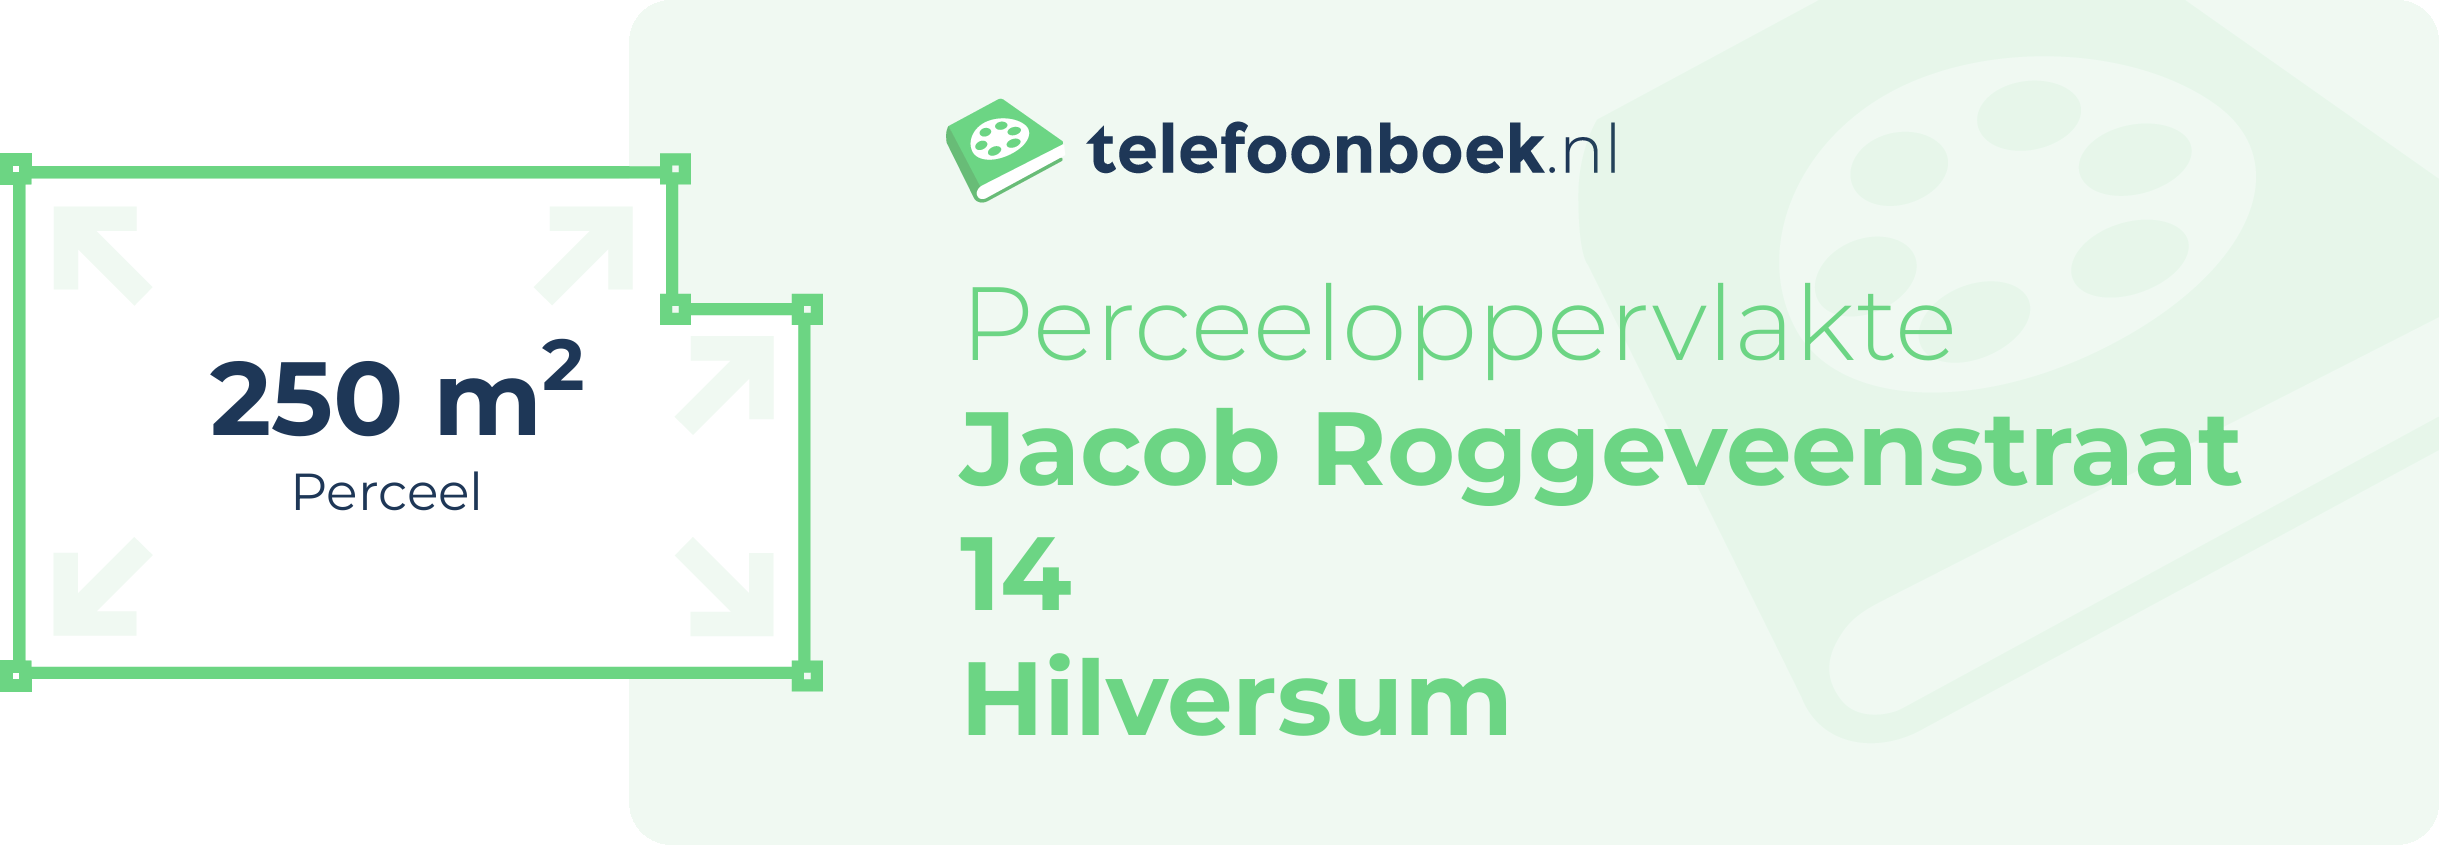 Perceeloppervlakte Jacob Roggeveenstraat 14 Hilversum